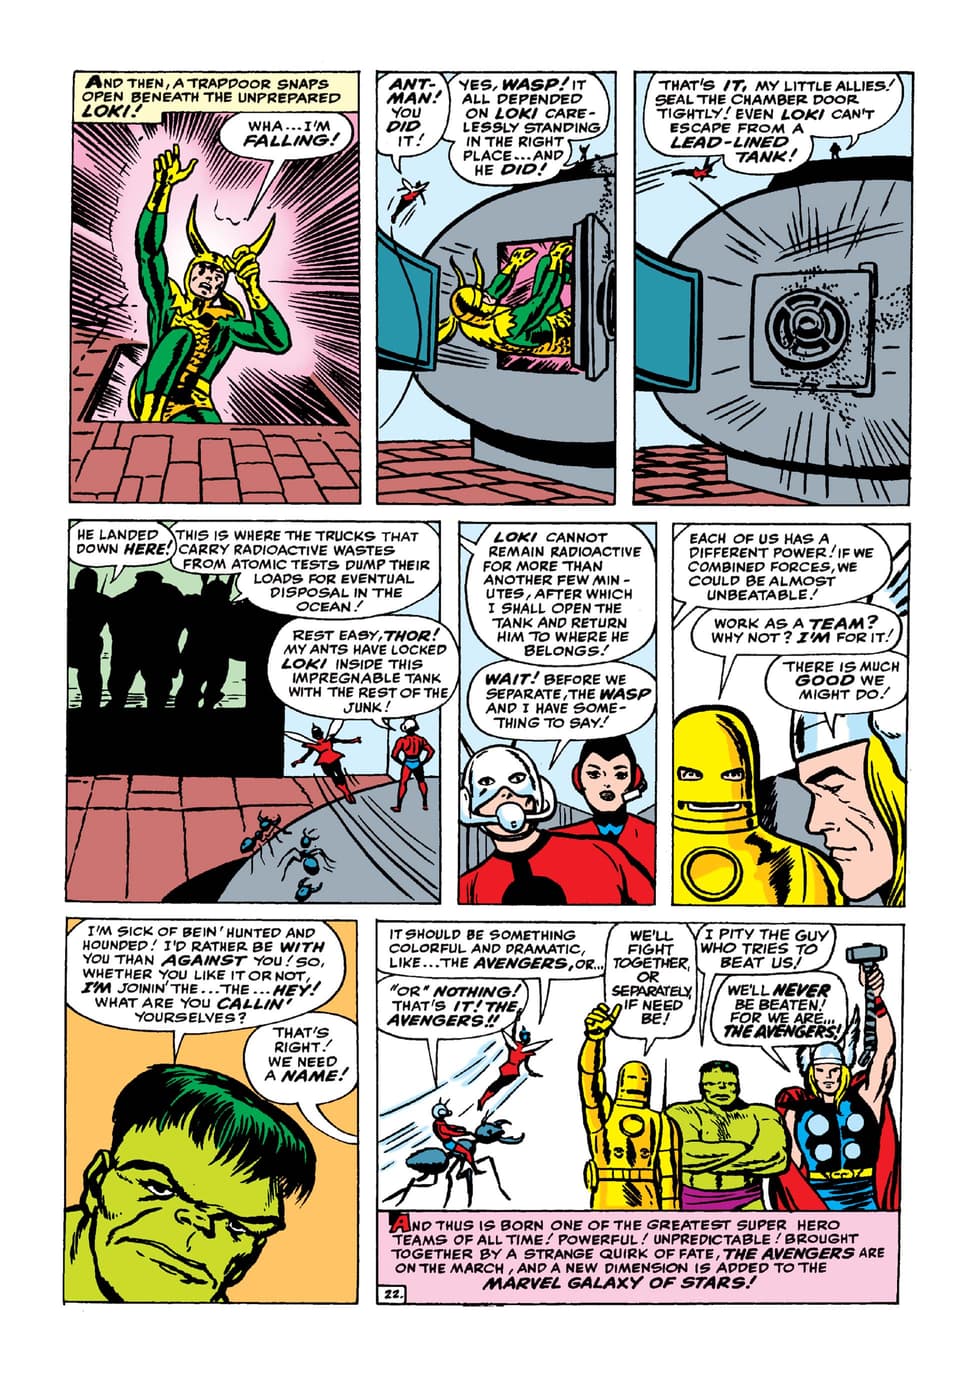 “We’ll never be beaten! For we are... the Avengers!” – AVENGERS (1963) #1